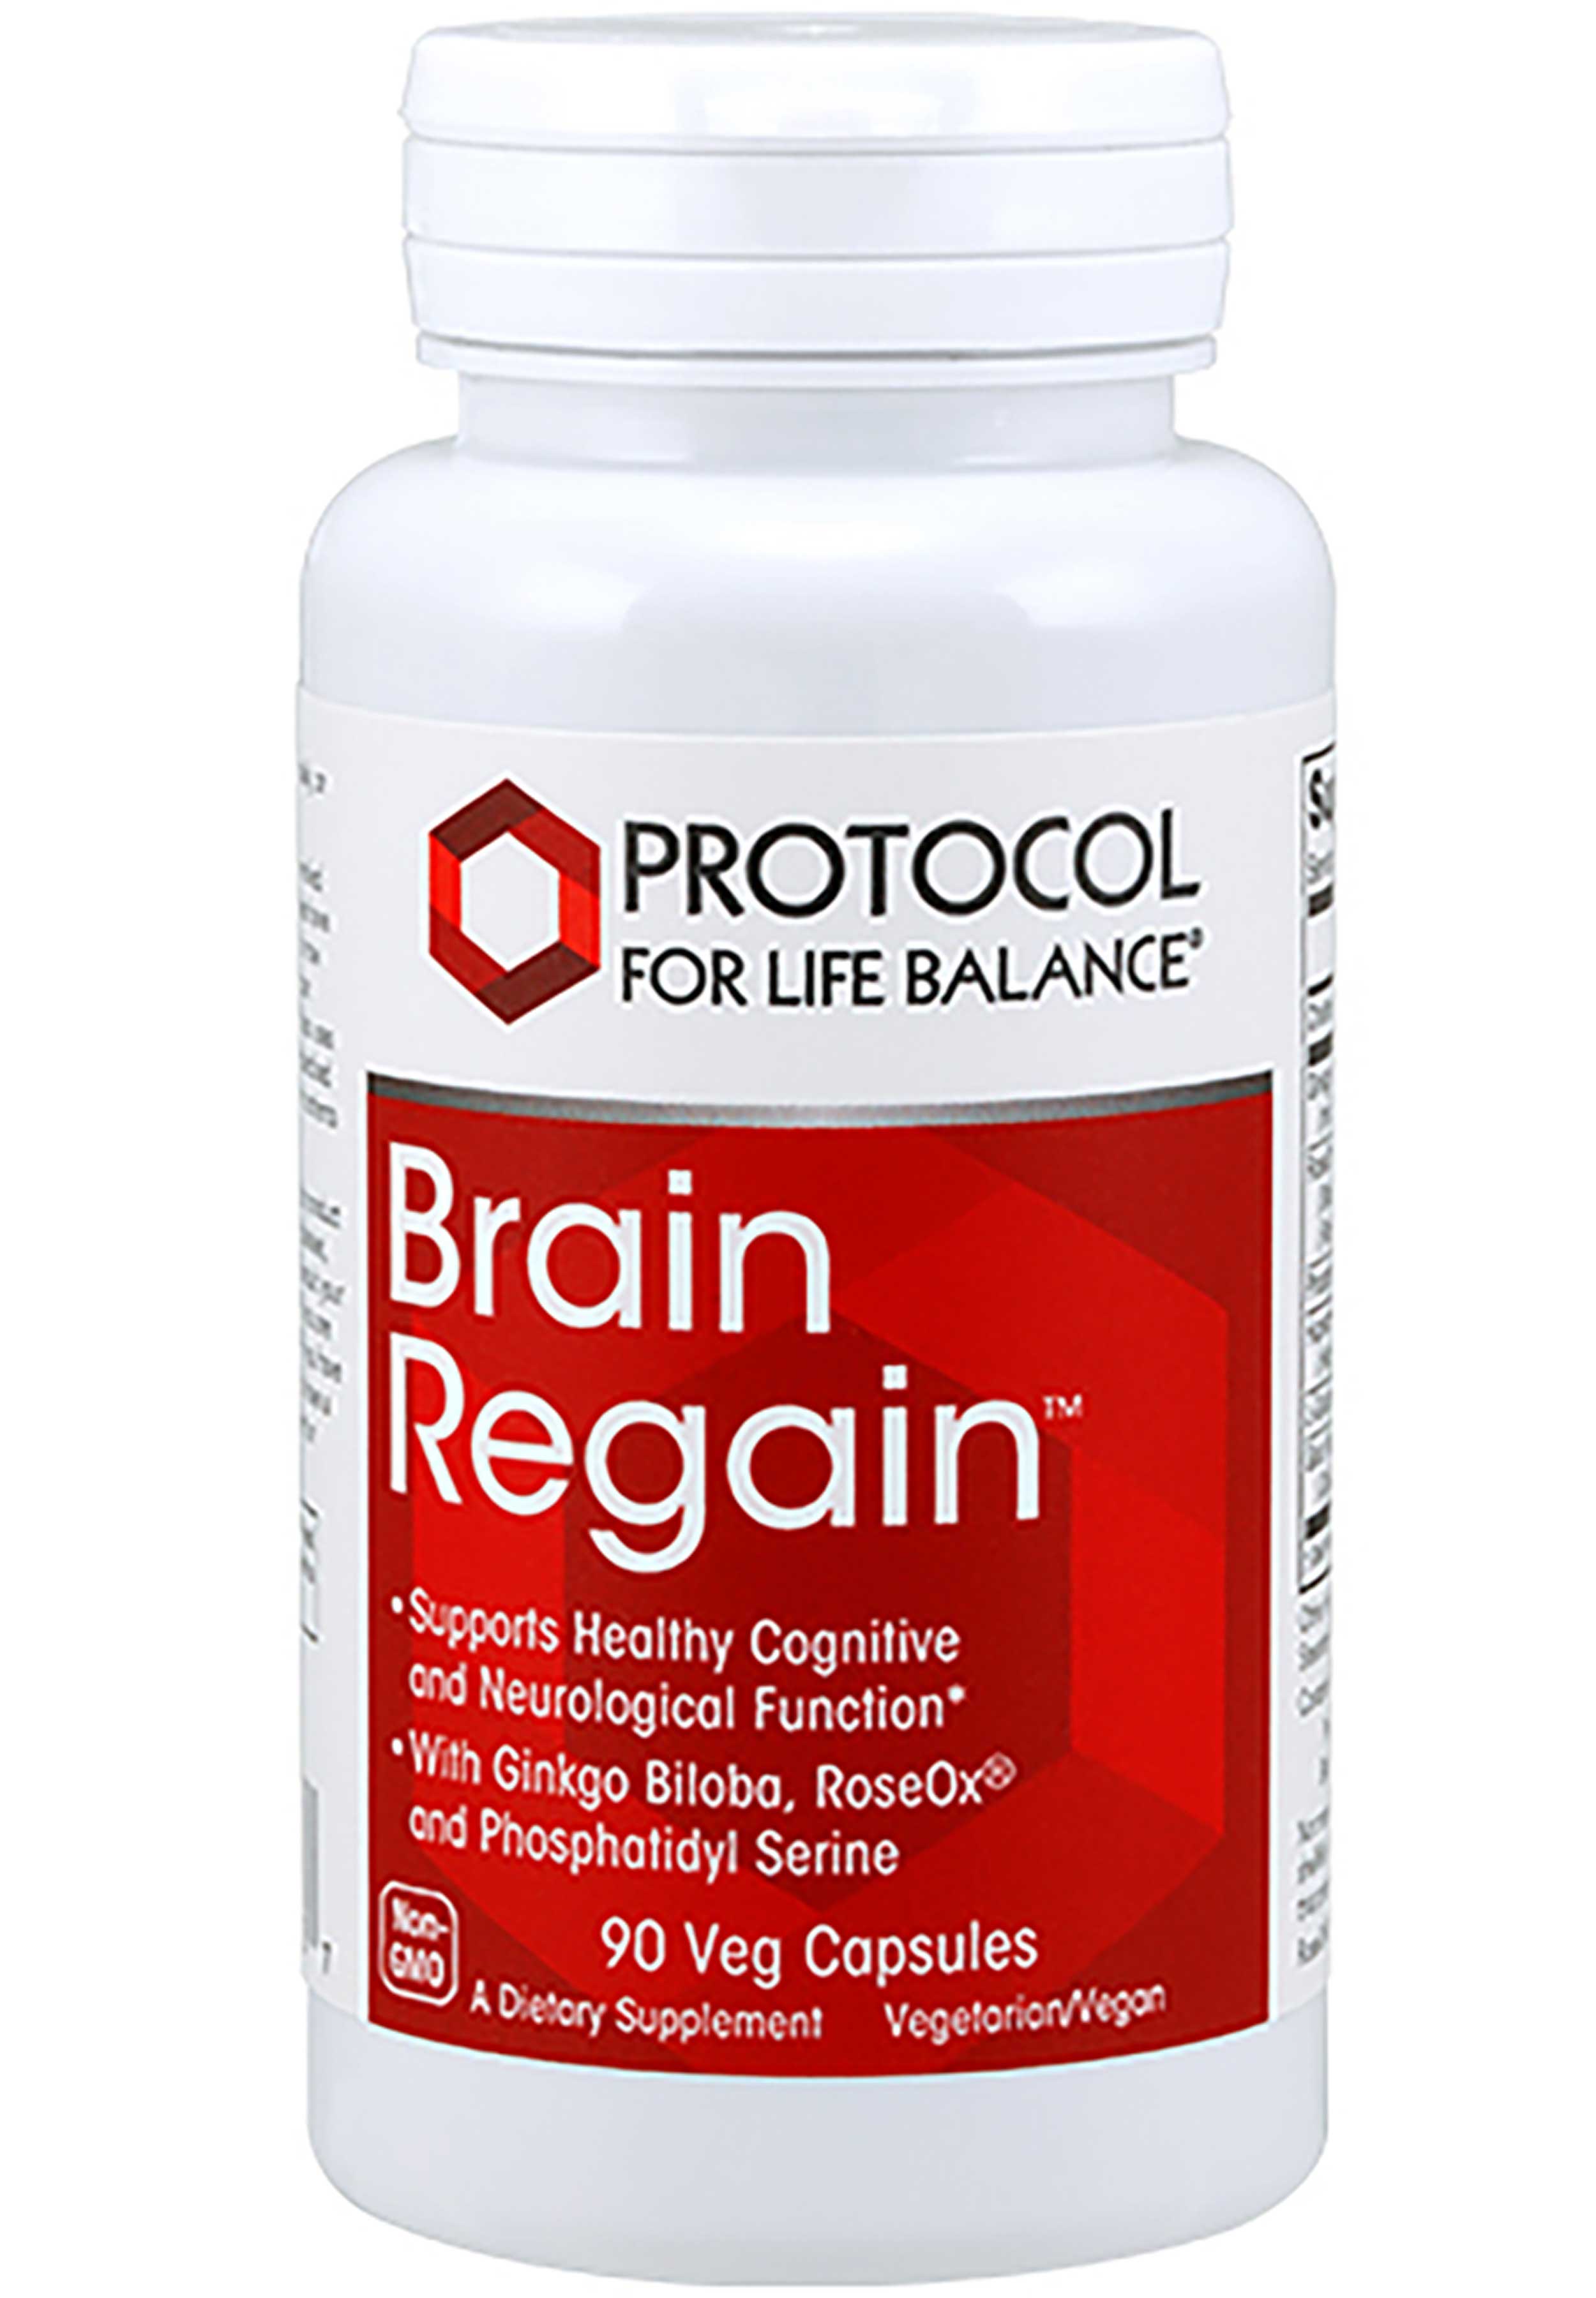 Protocol for Life Balance Brain Regain